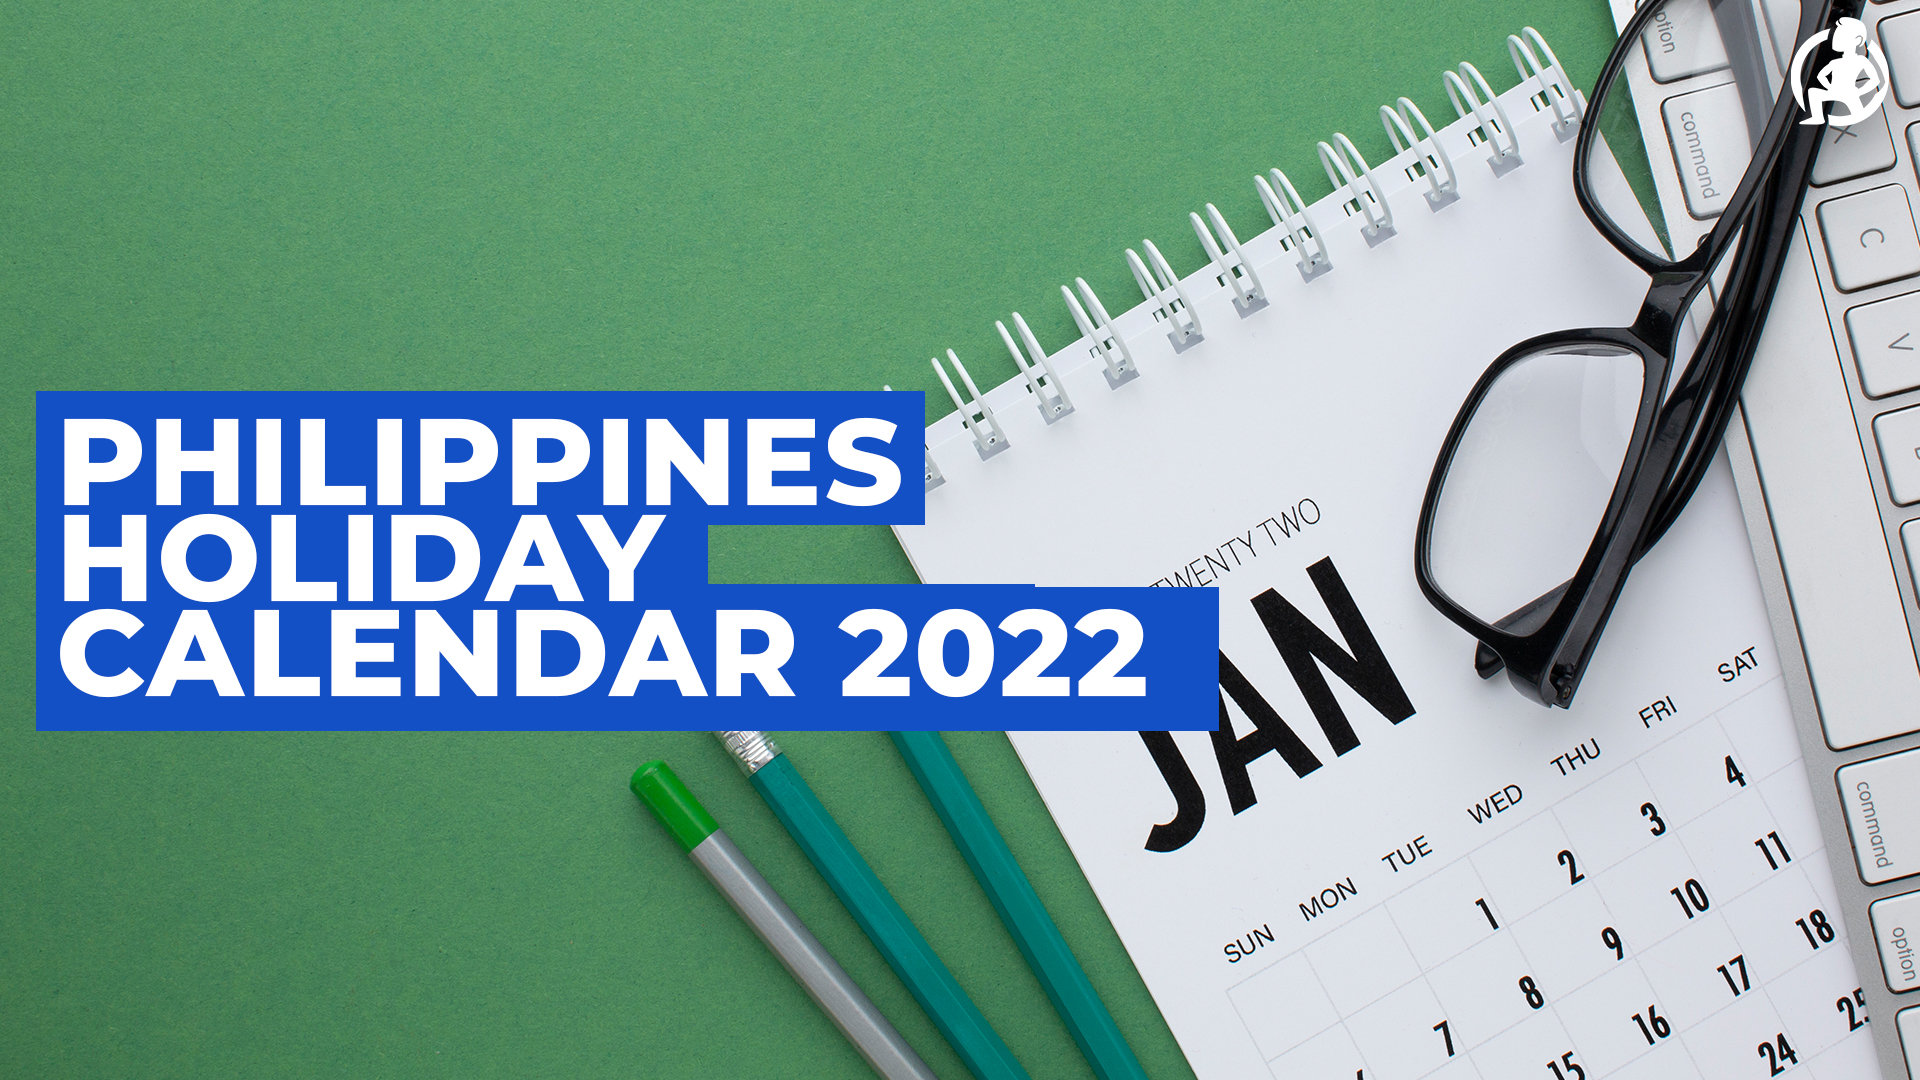 Philippines holiday calendar 2022